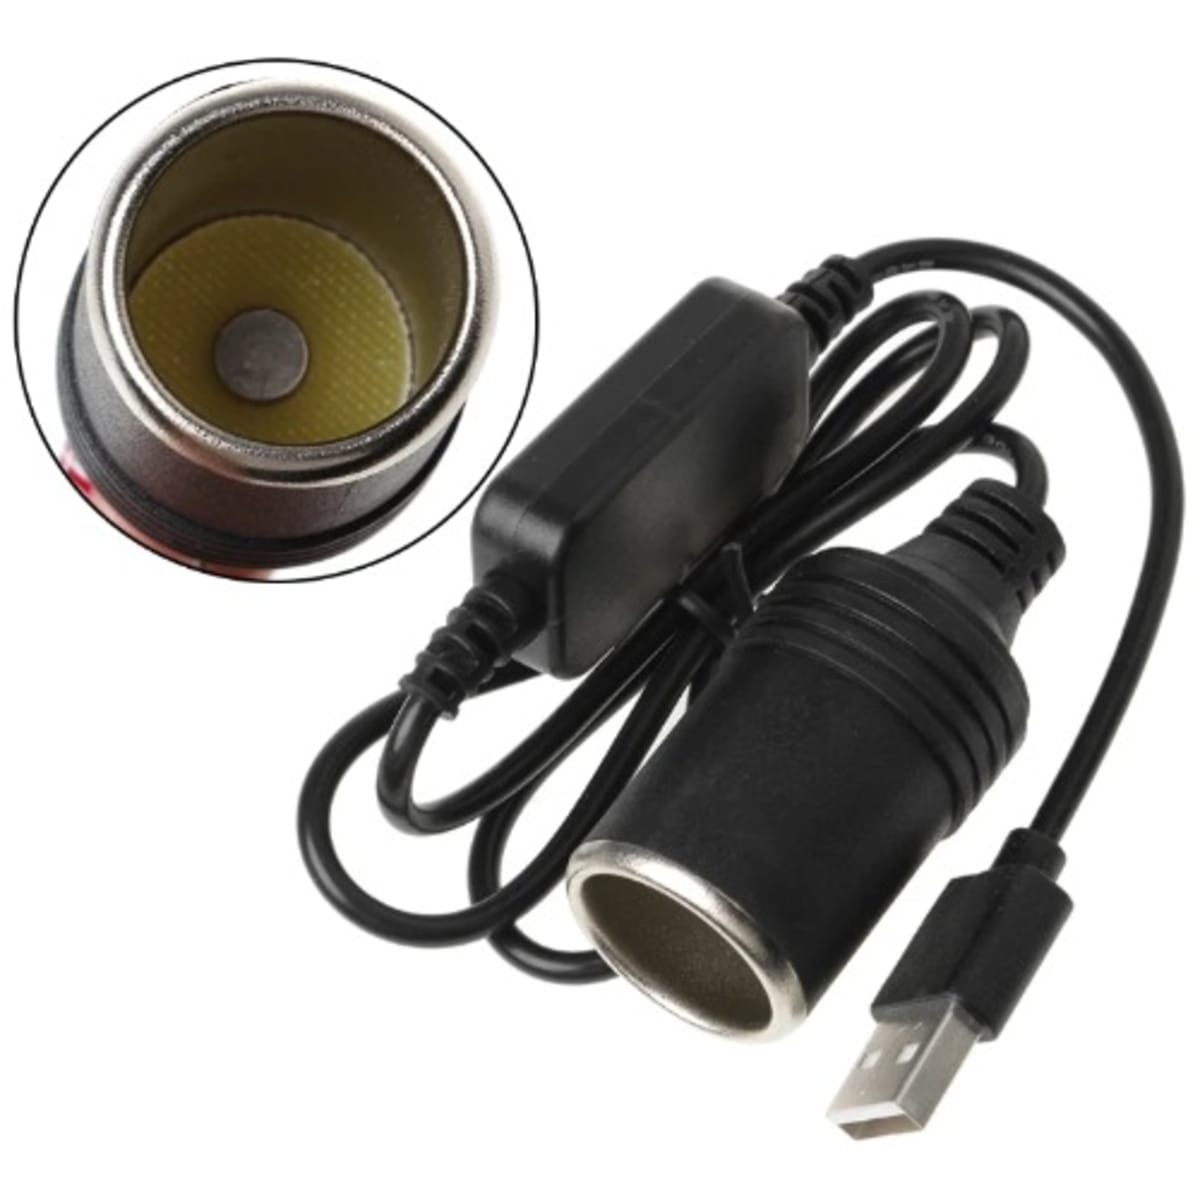 Usb 5v To 12v Car Socket Female Power Converter Adapter Cable With Cigarette  Lighter